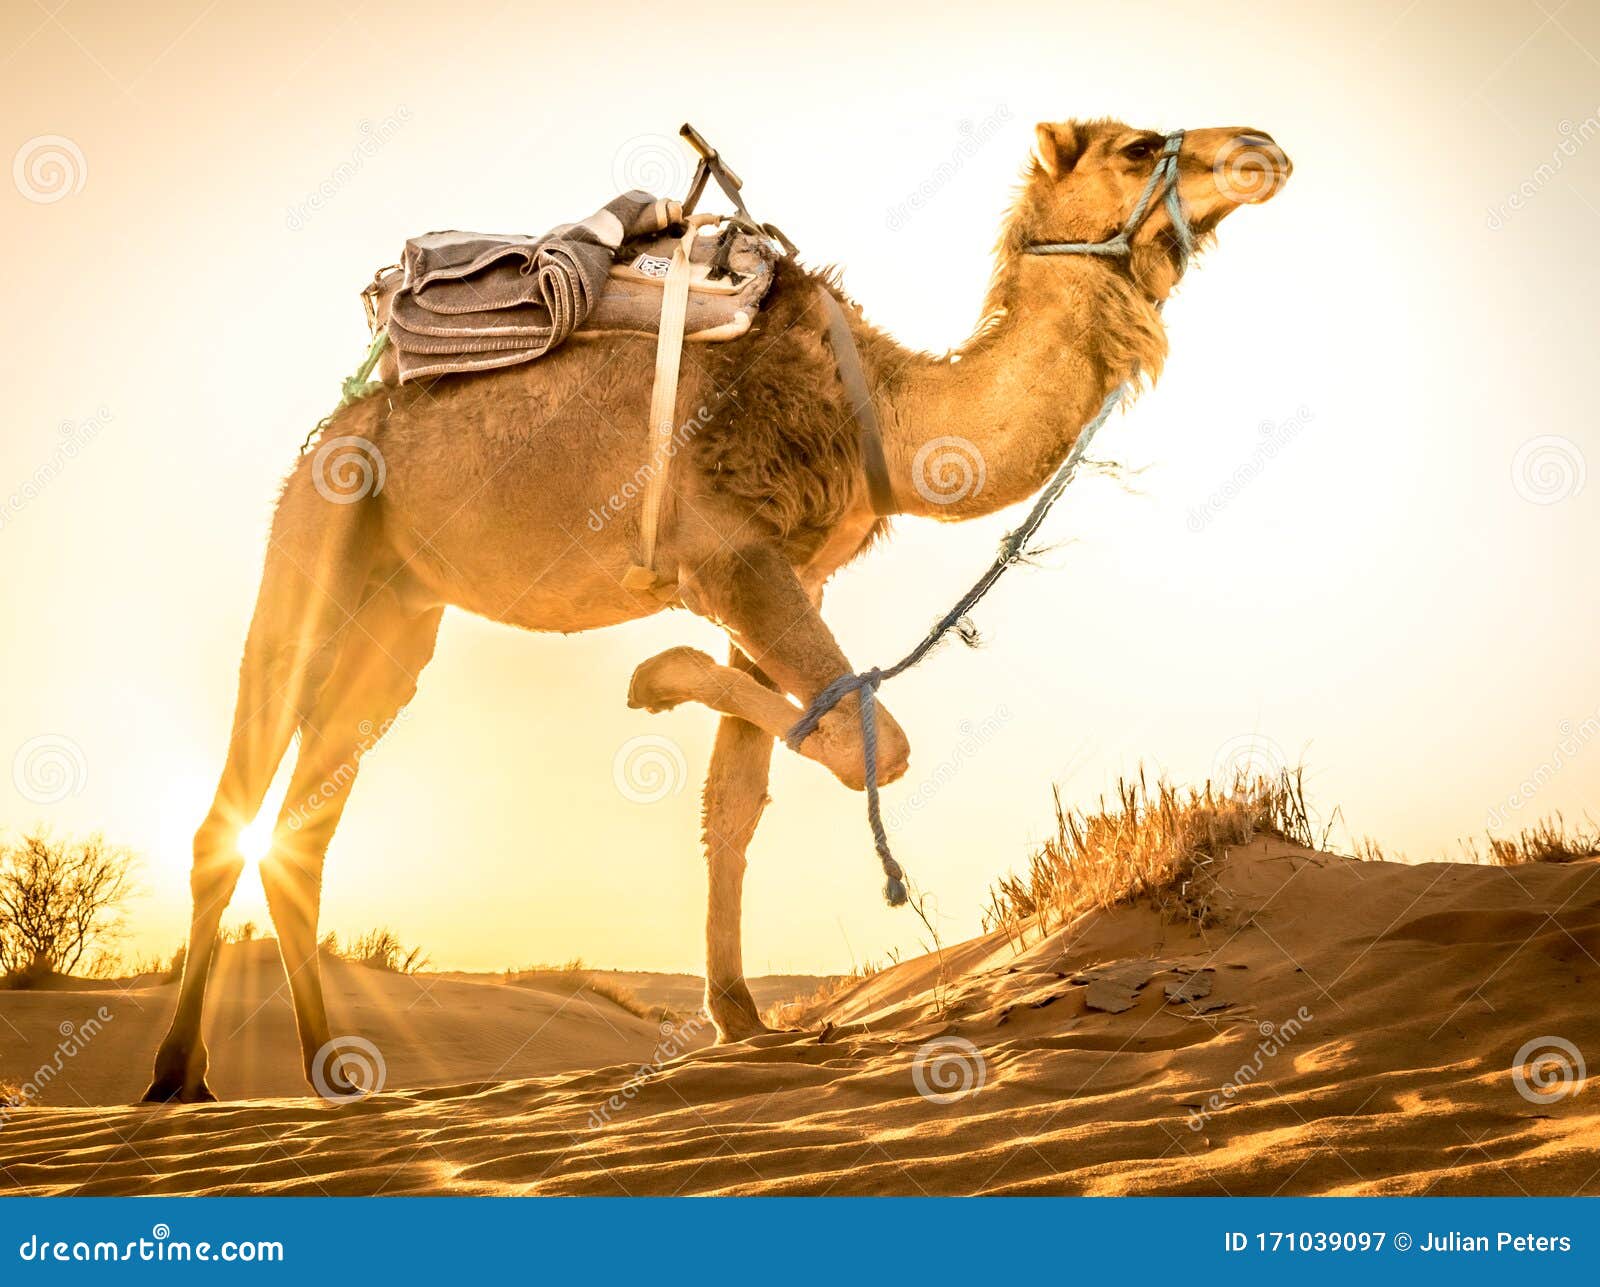 camel at sahara desert during sunrise, merzouga, morocco